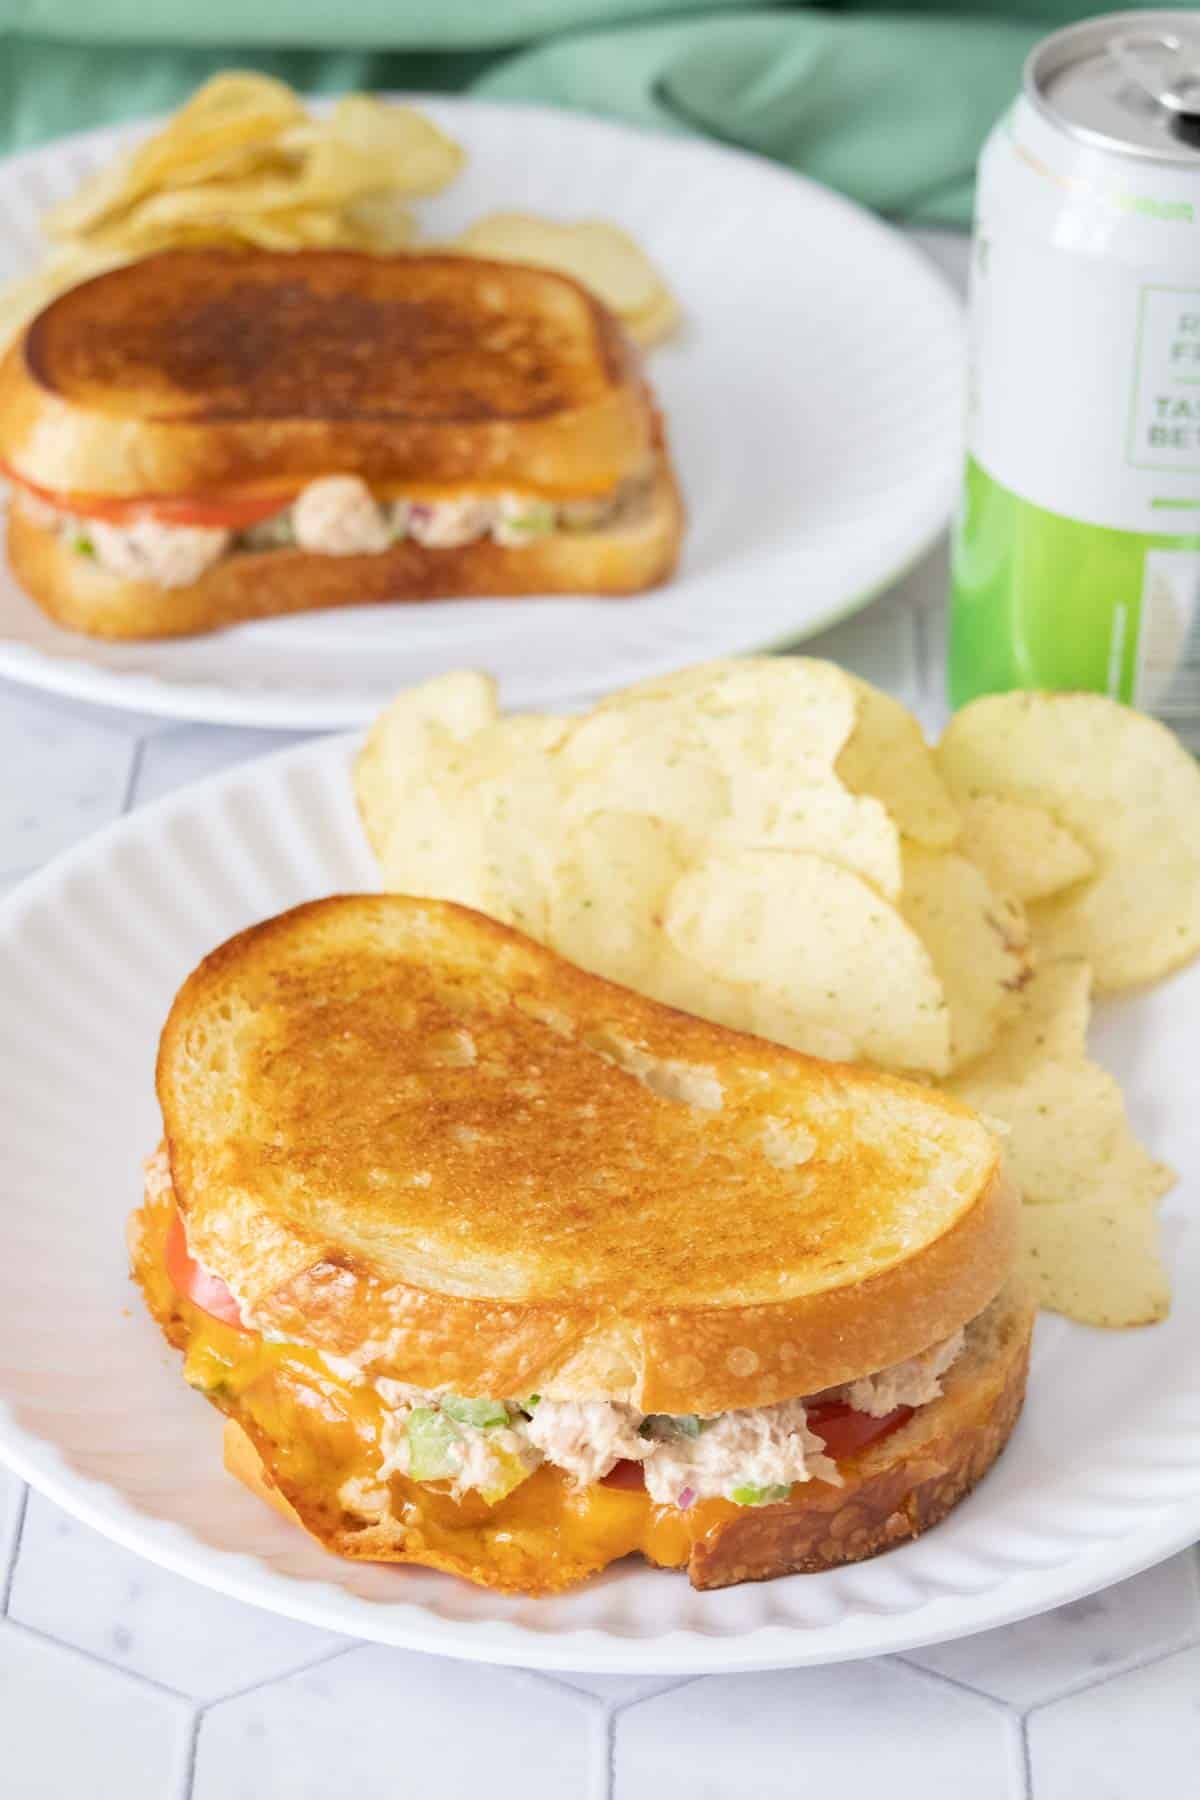 Tuna melt sandwich on white plate with potato chips beside.